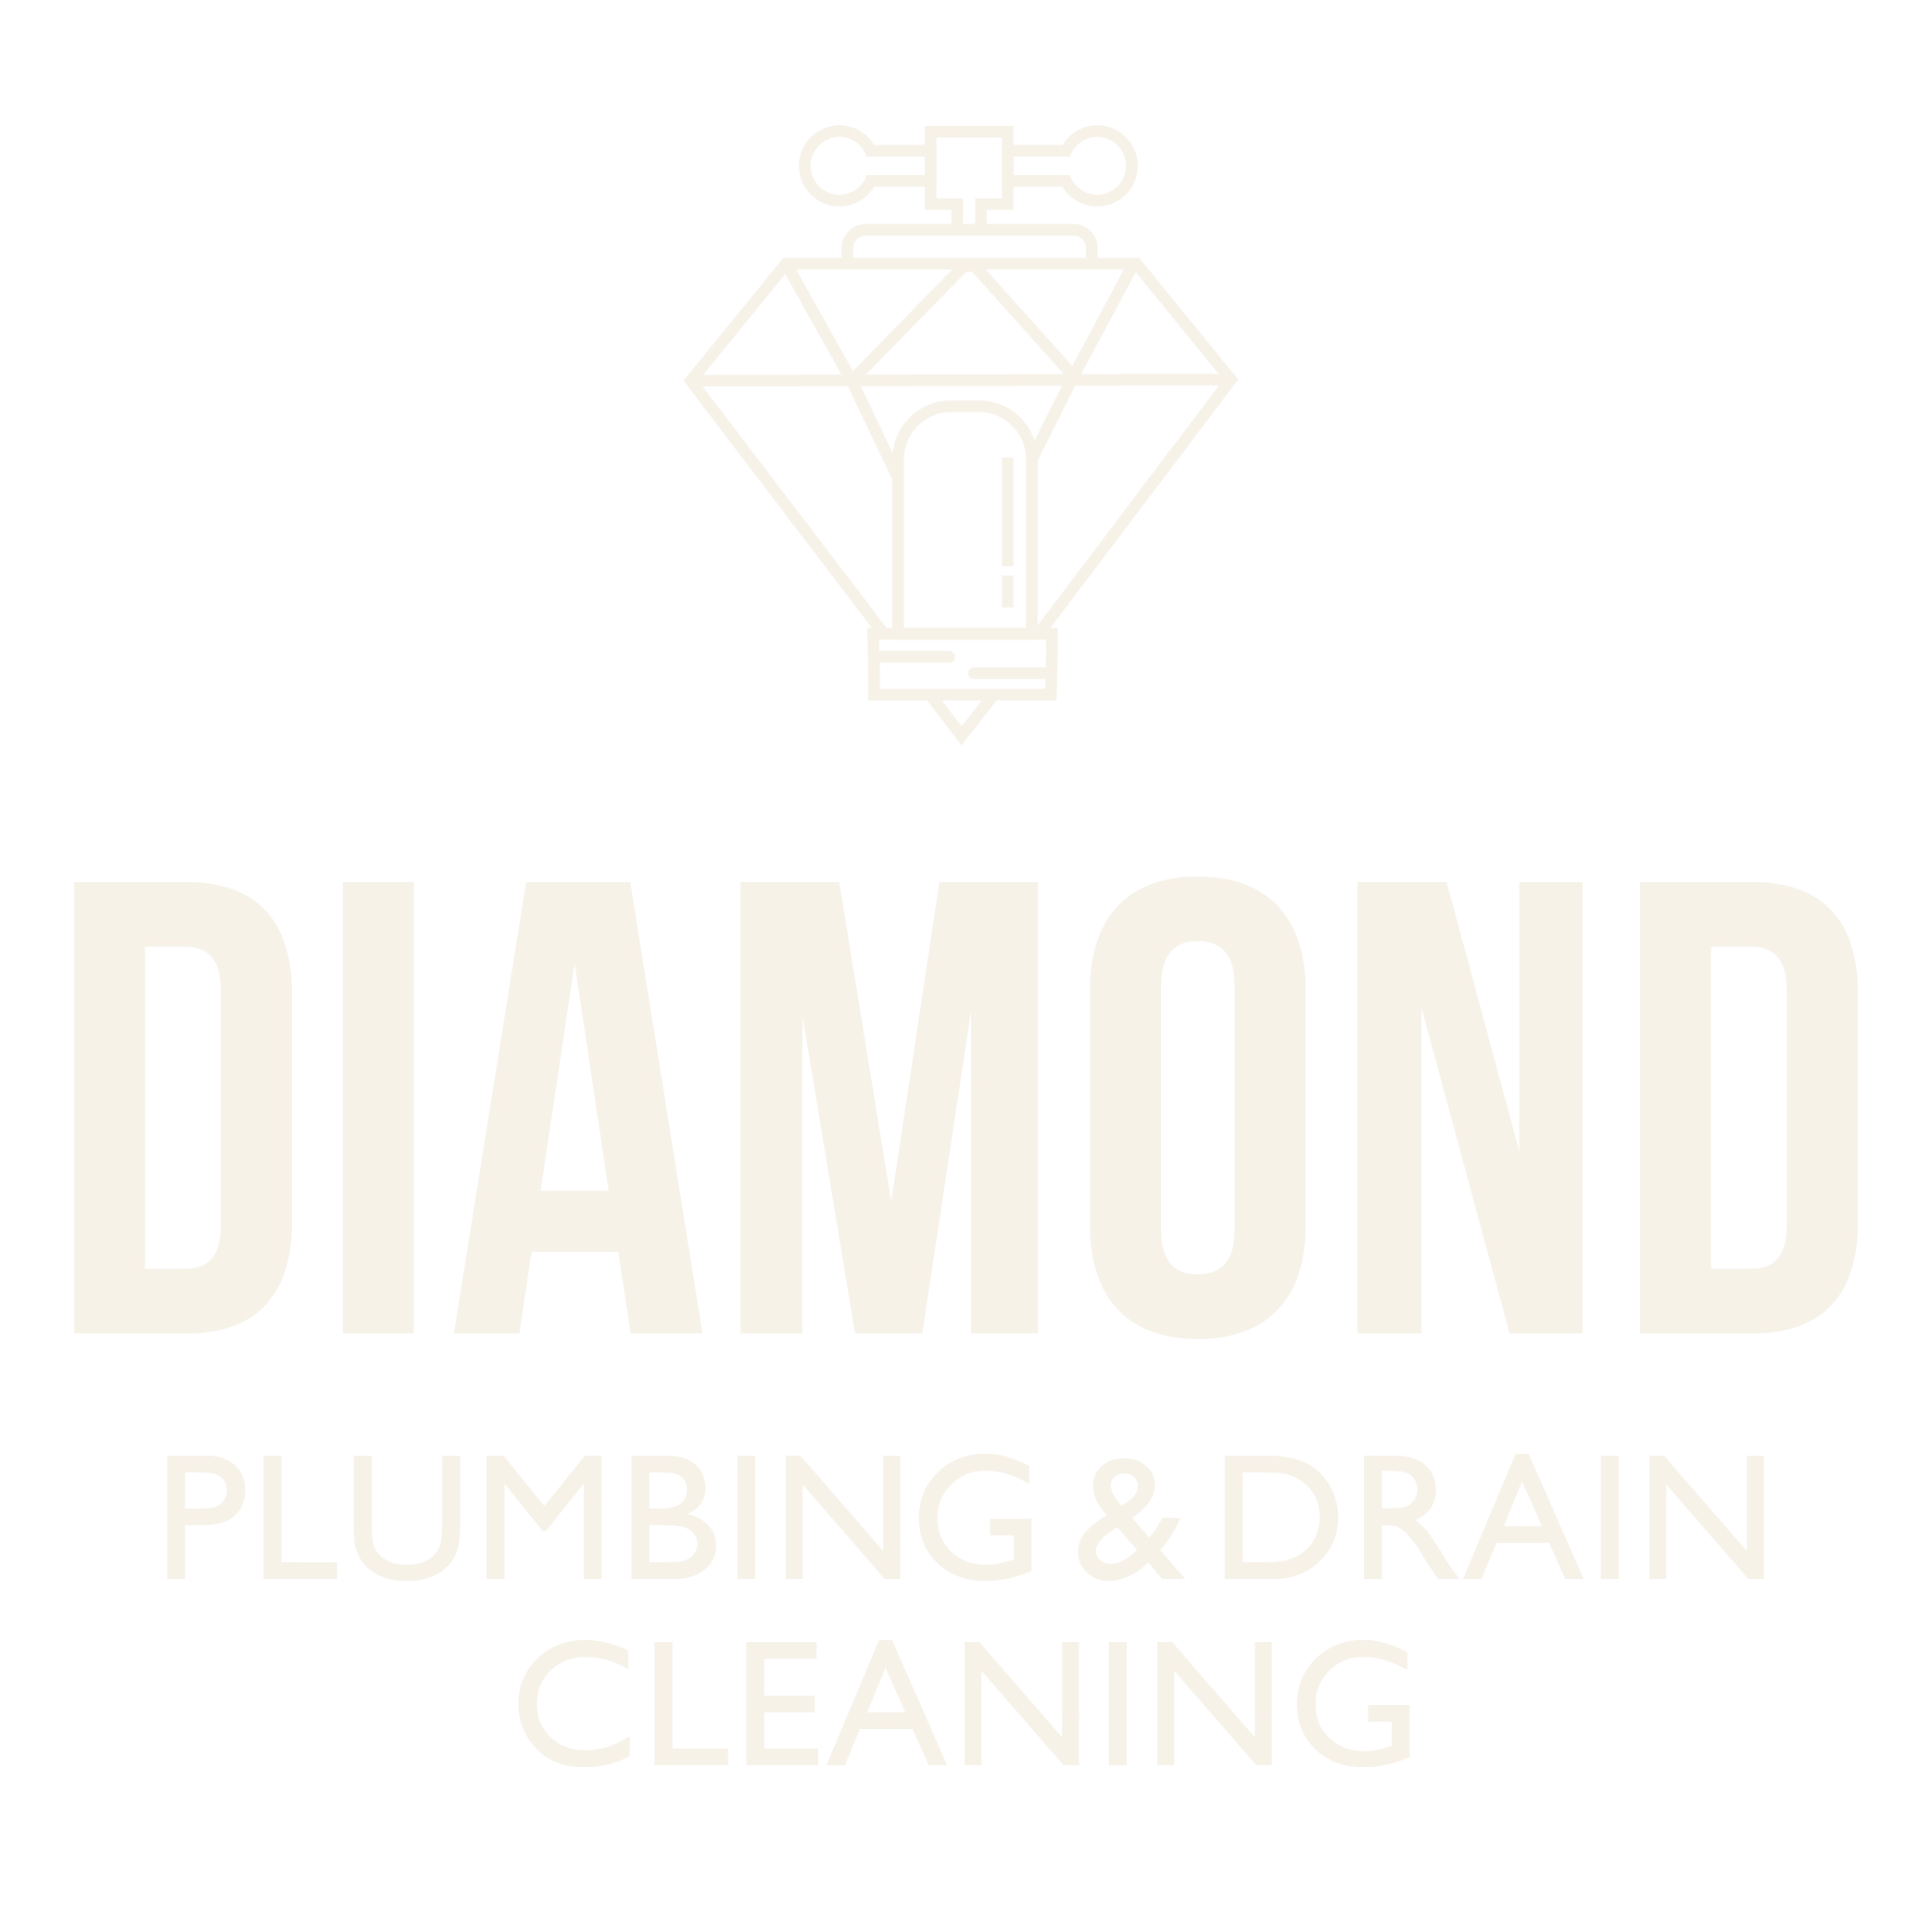 Diamond Plumbing & Drain Cleaning Logo